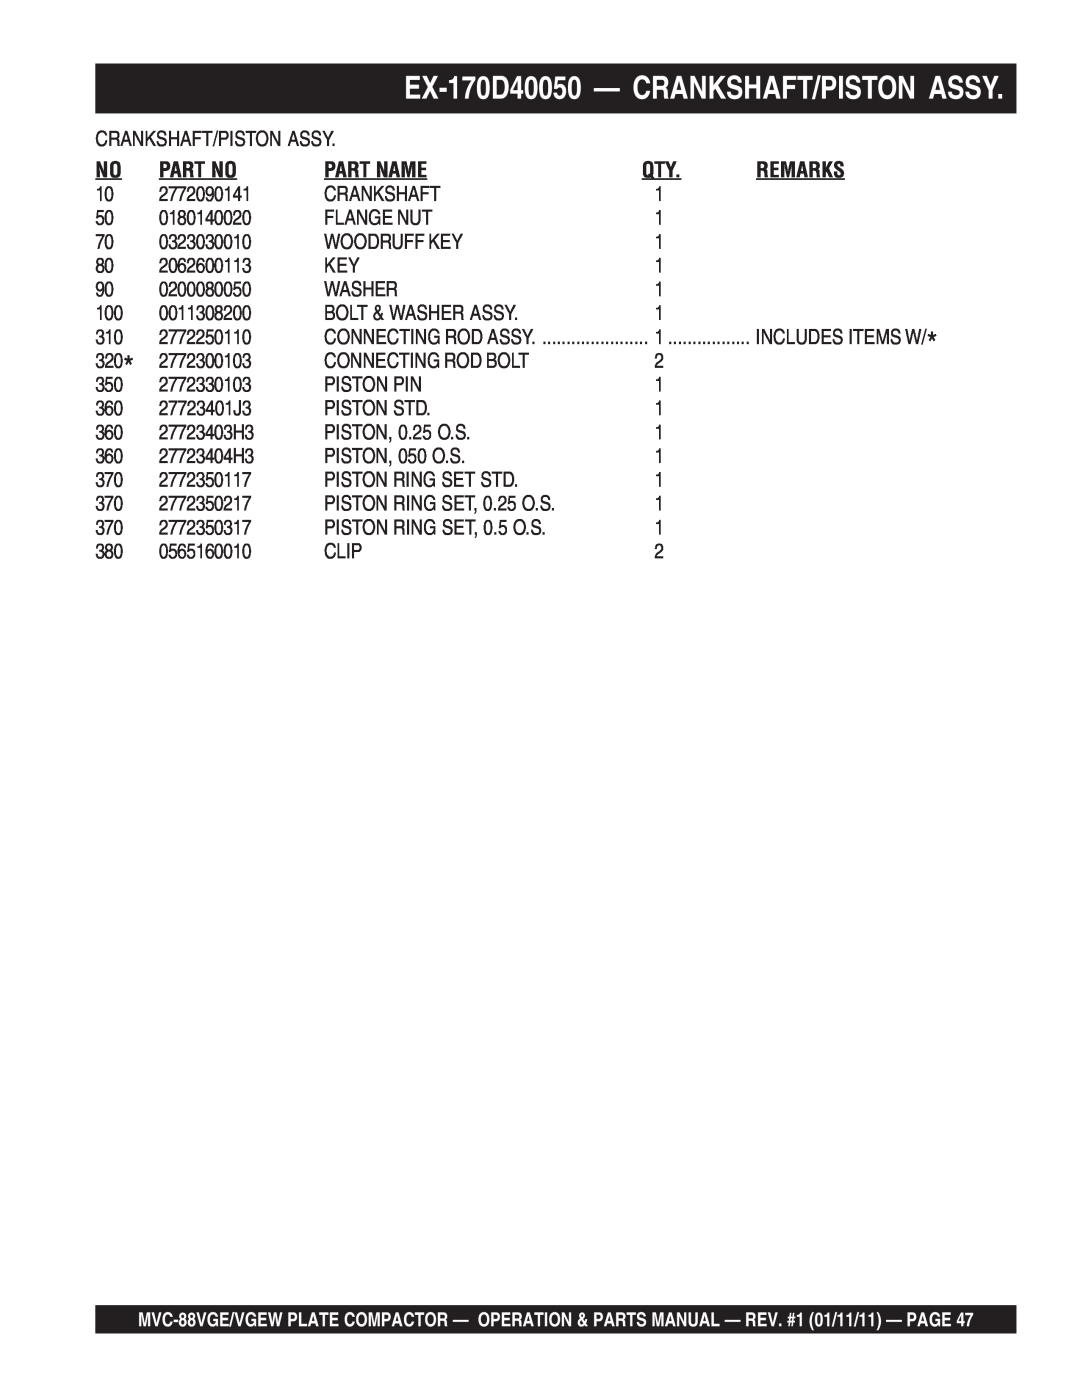 Multiquip MVC-88VGE/VGEW manual EX-170D40050 - CRANKSHAFT/PISTON ASSY, Part Name, Remarks 